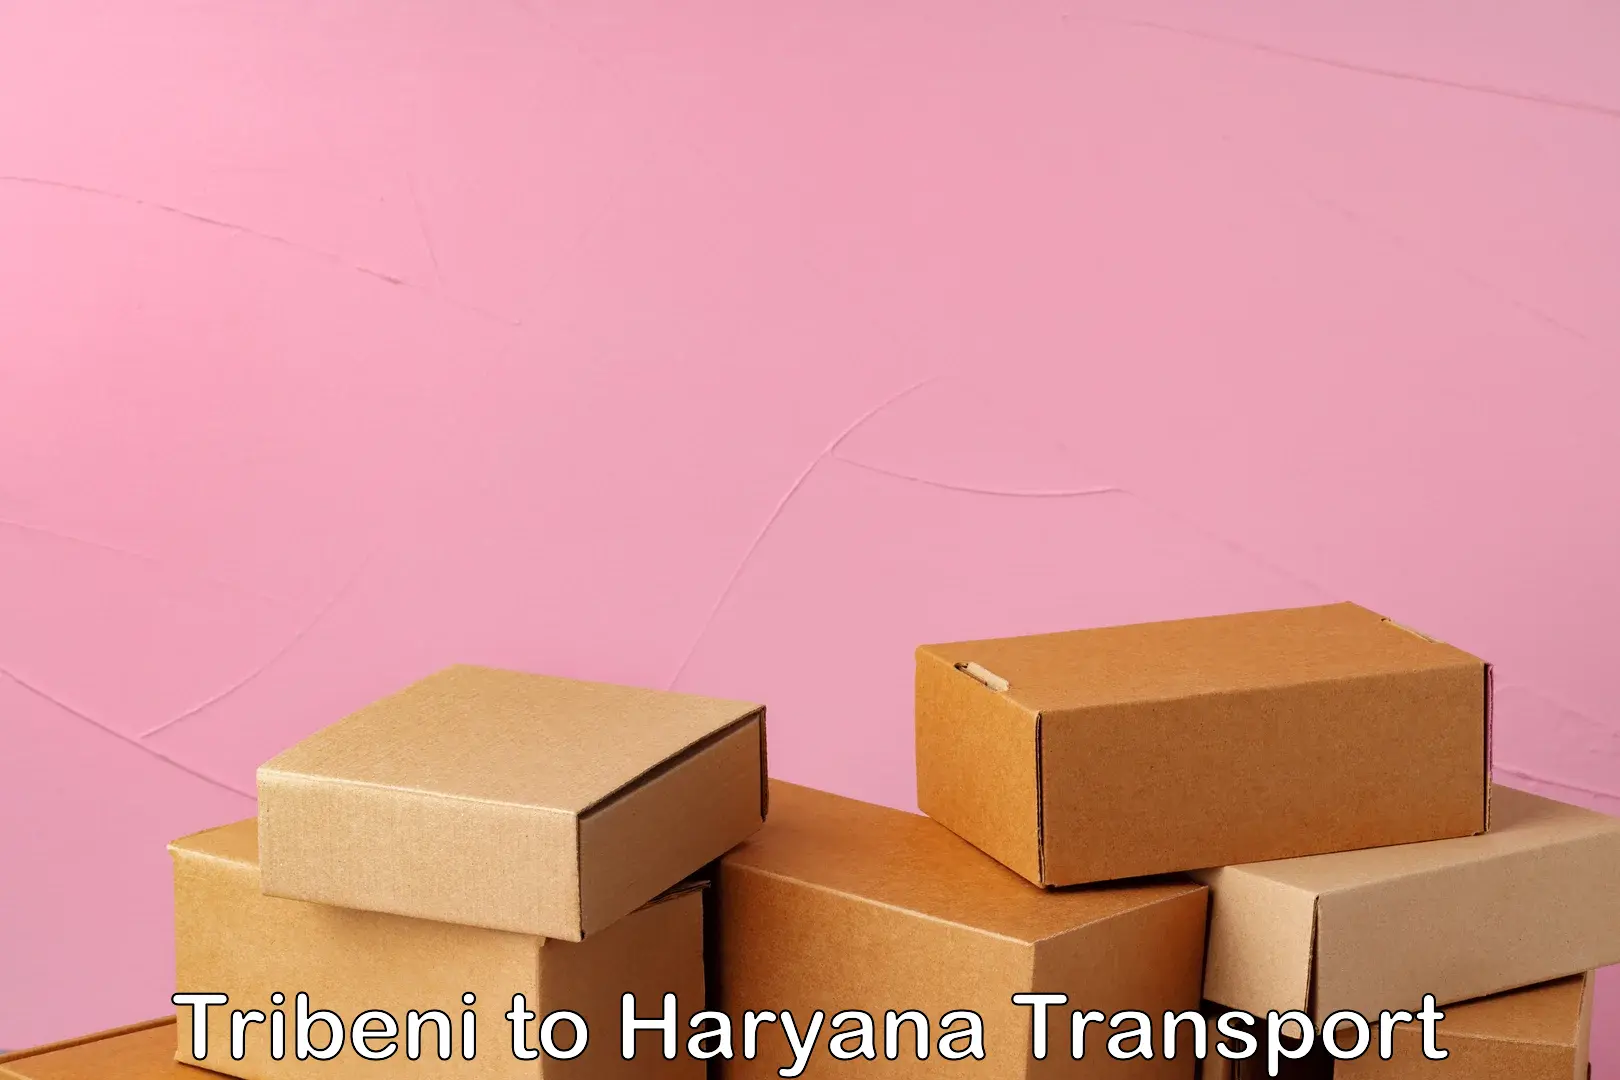 Truck transport companies in India in Tribeni to Haryana